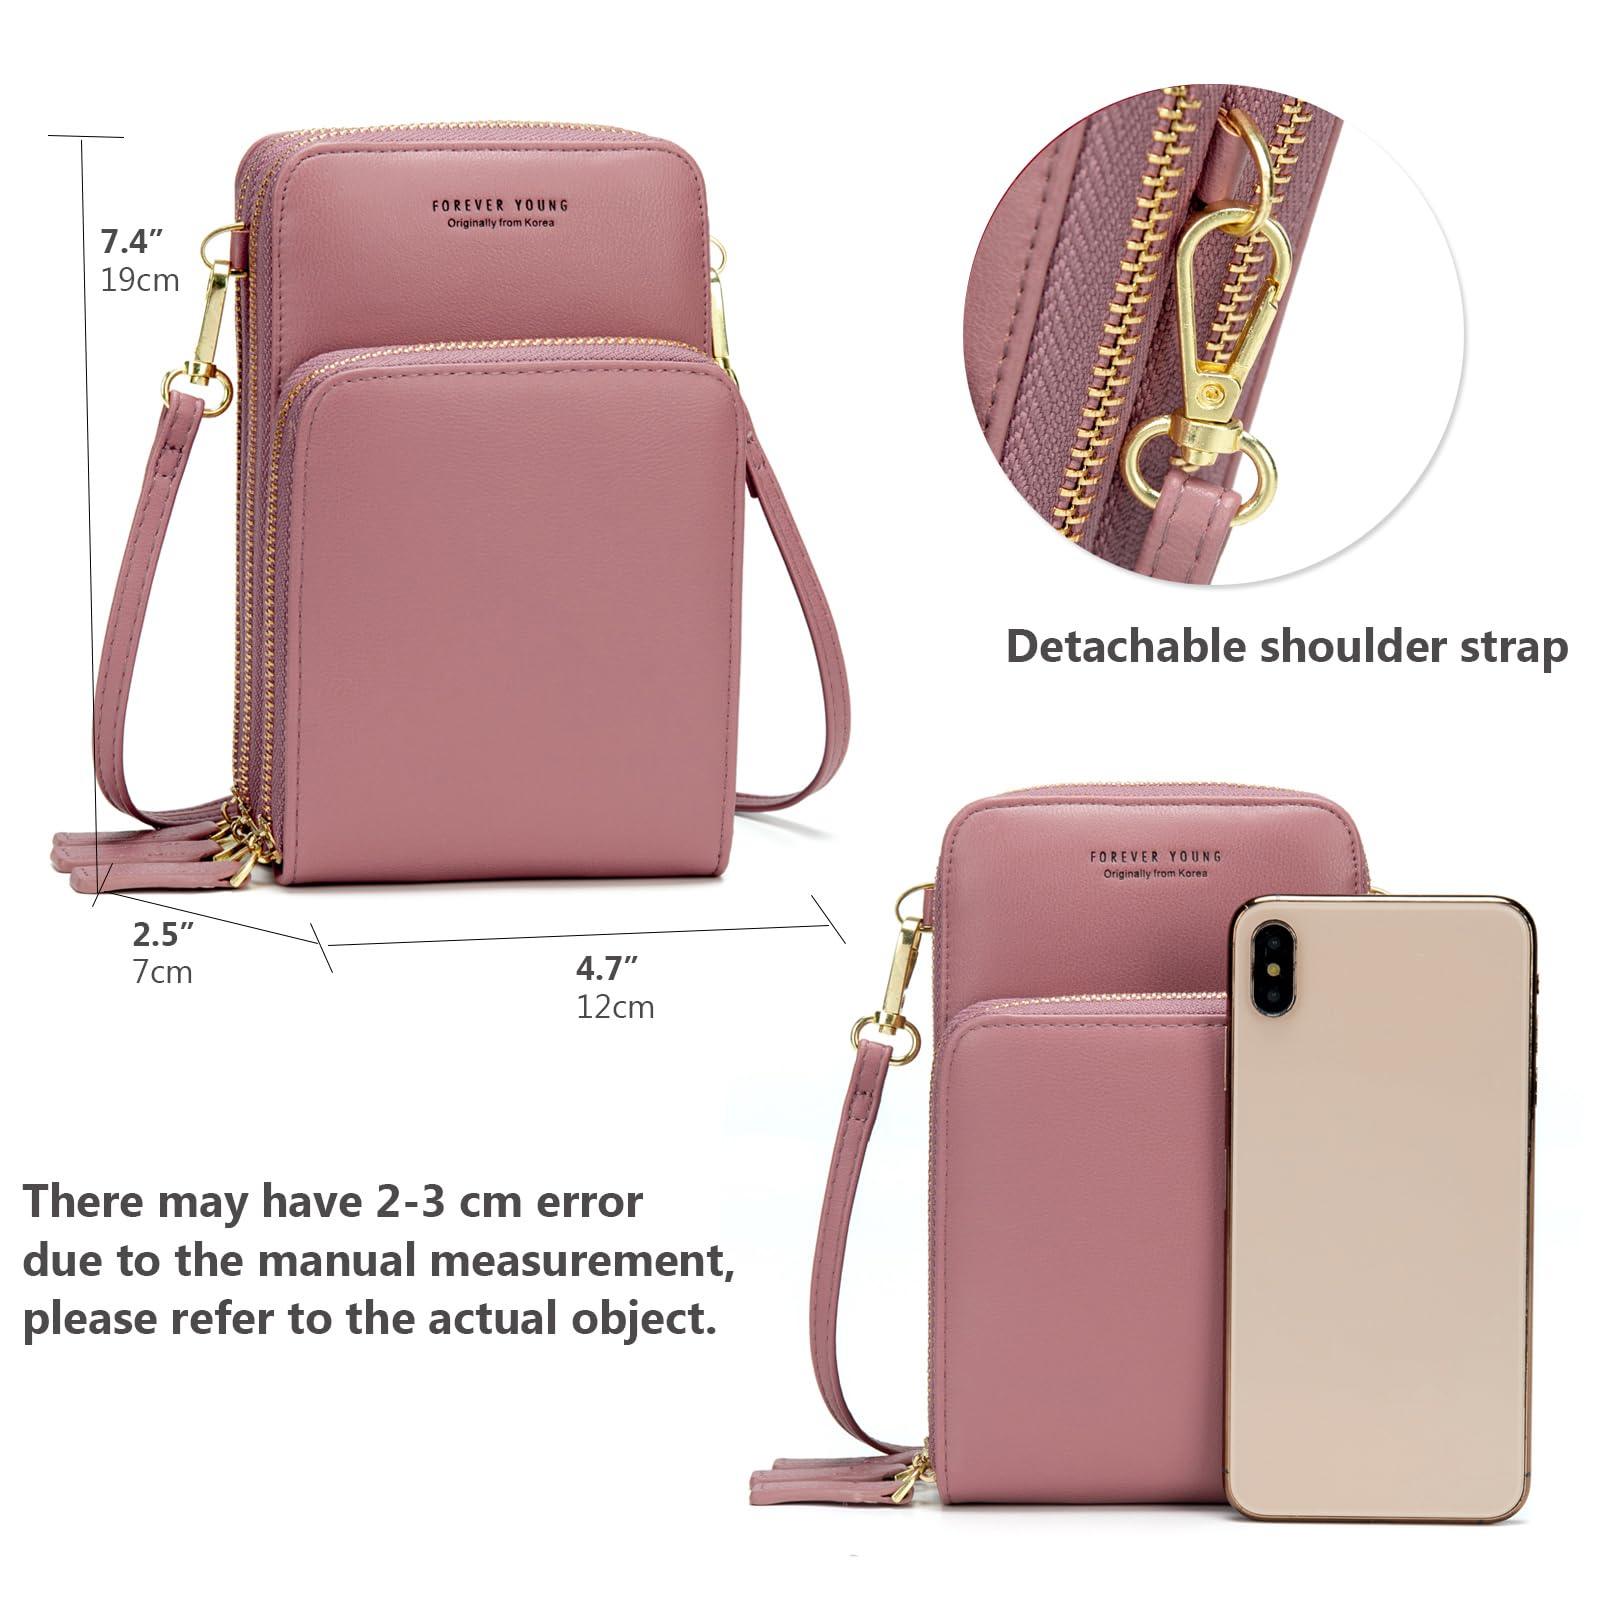 myfriday Small Crossbody Cell Phone Bag for Women, Mini Over Shoulder Handbag Purse with Credit Card Slots - Bona Fide Fashion